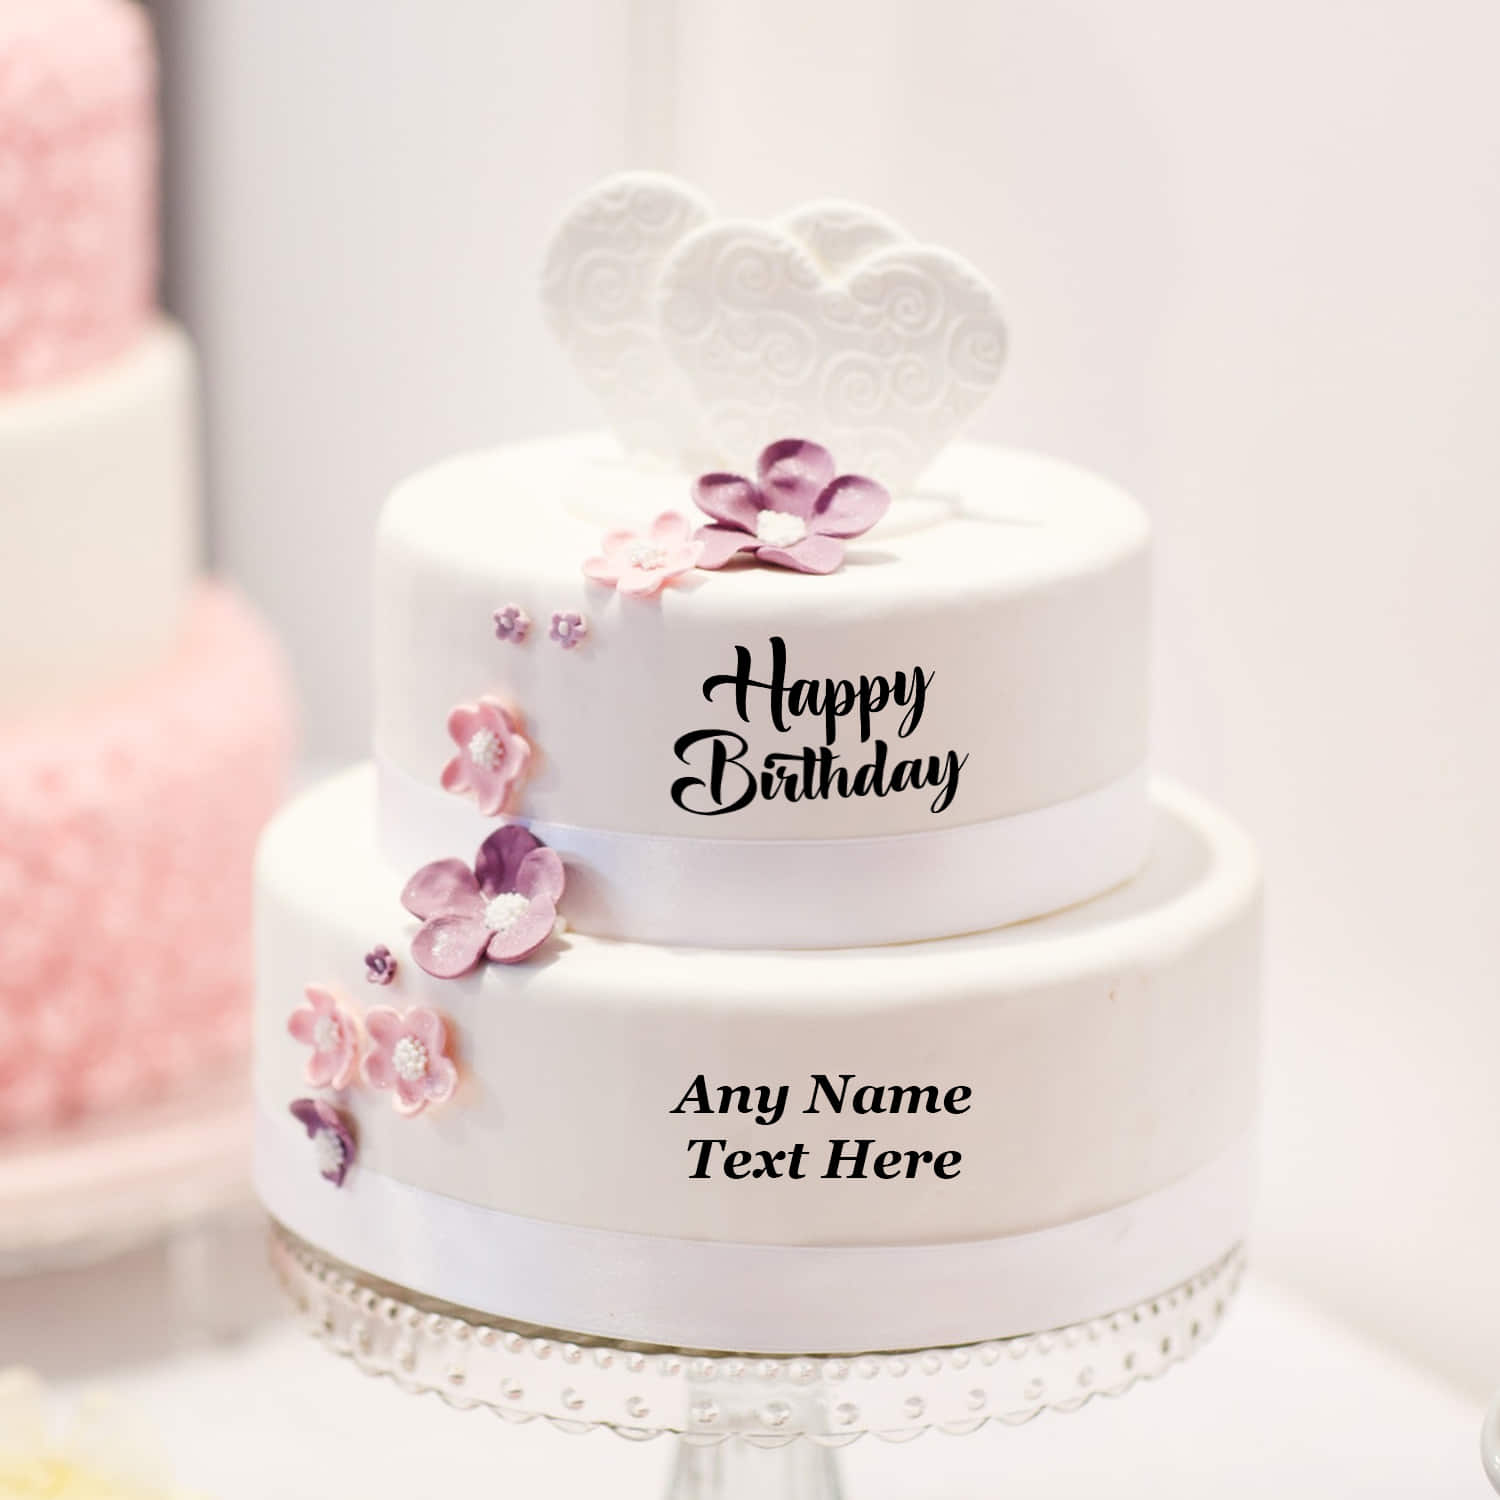 Top more than 142 cheap birthday cake ideas